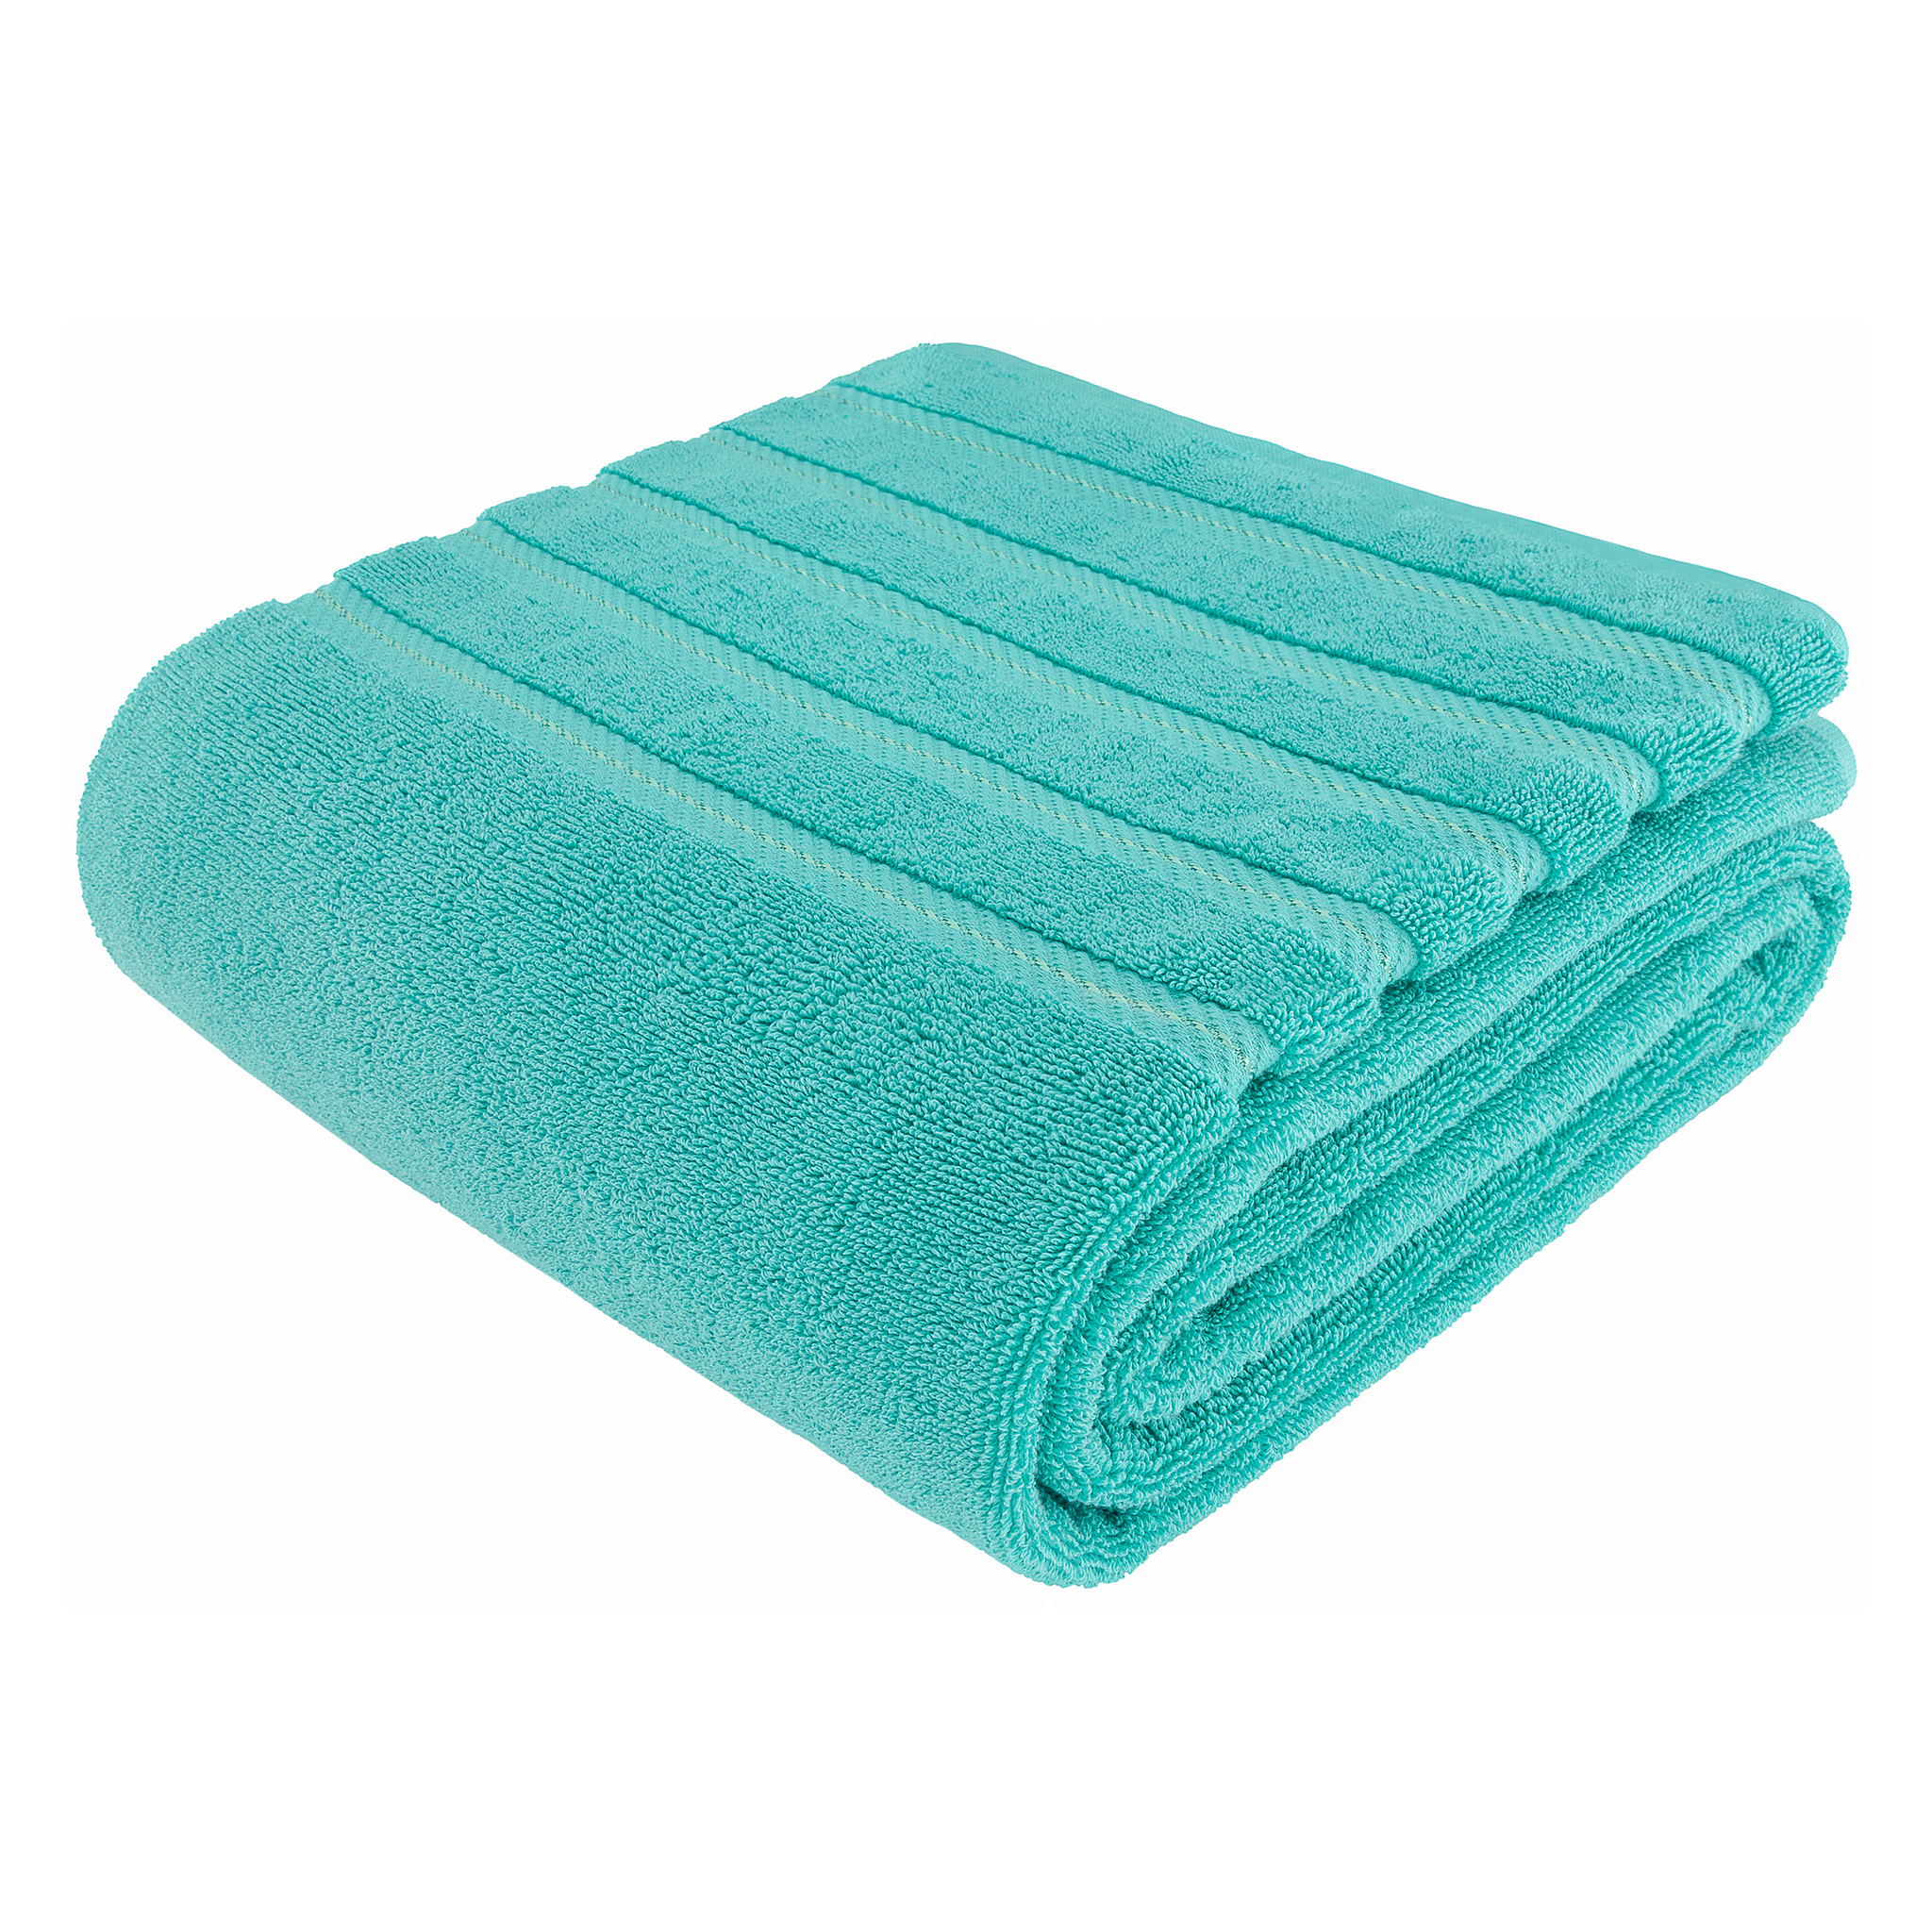 American Soft Linen - 35x70 Jumbo Bath Sheet Turkish Bath Towel - 16 Piece Case Pack - Turquoise-Blue - 7